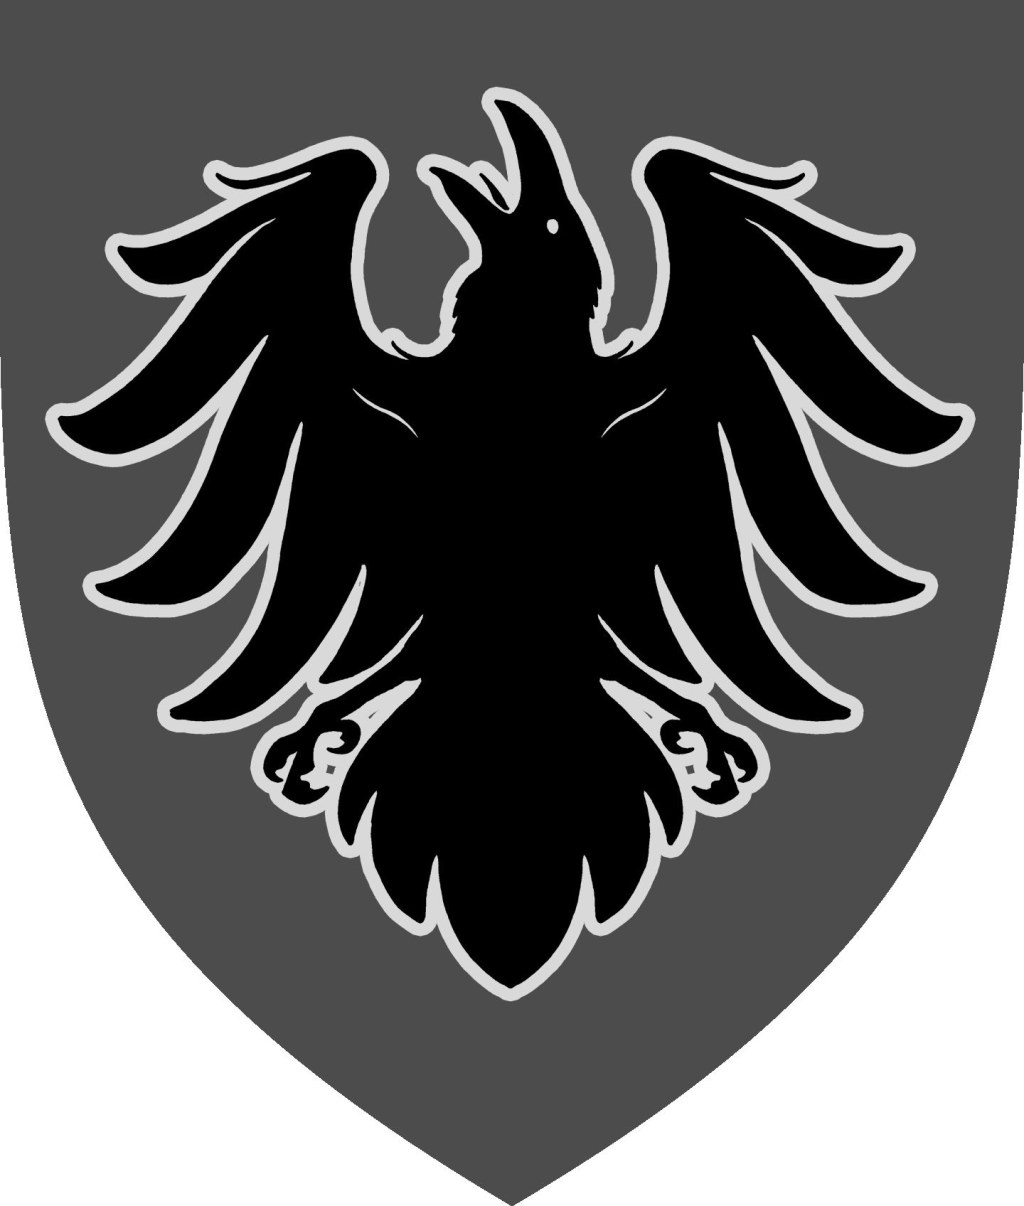 Picture of: Raven Heraldry  Heraldry design, Heraldry, Coat of arms